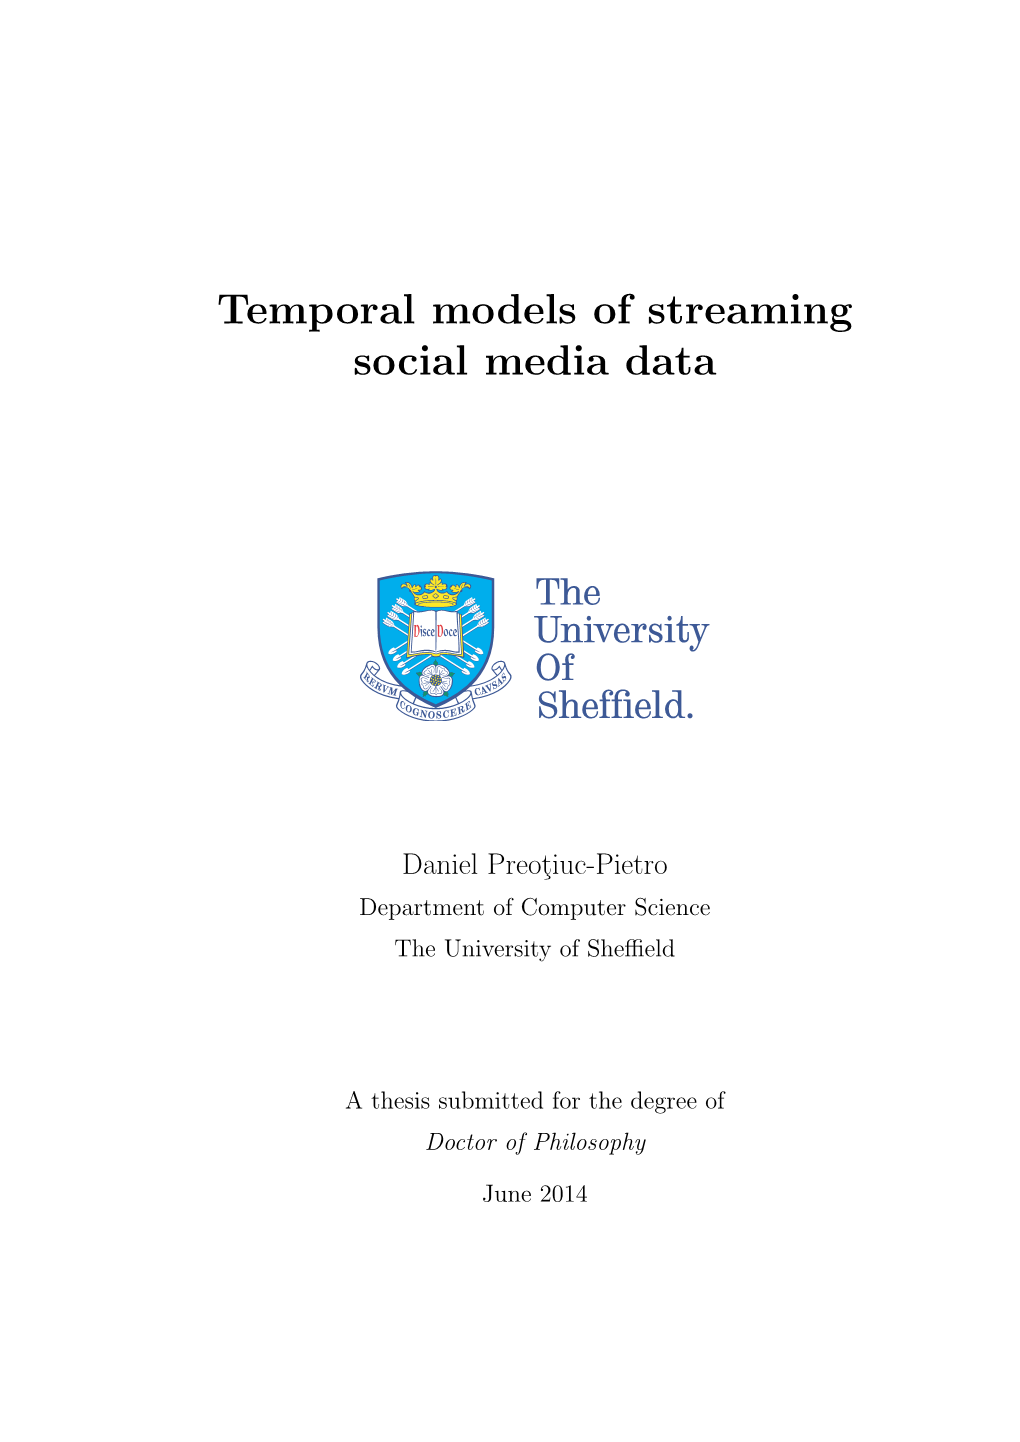 Temporal Models of Streaming Social Media Data